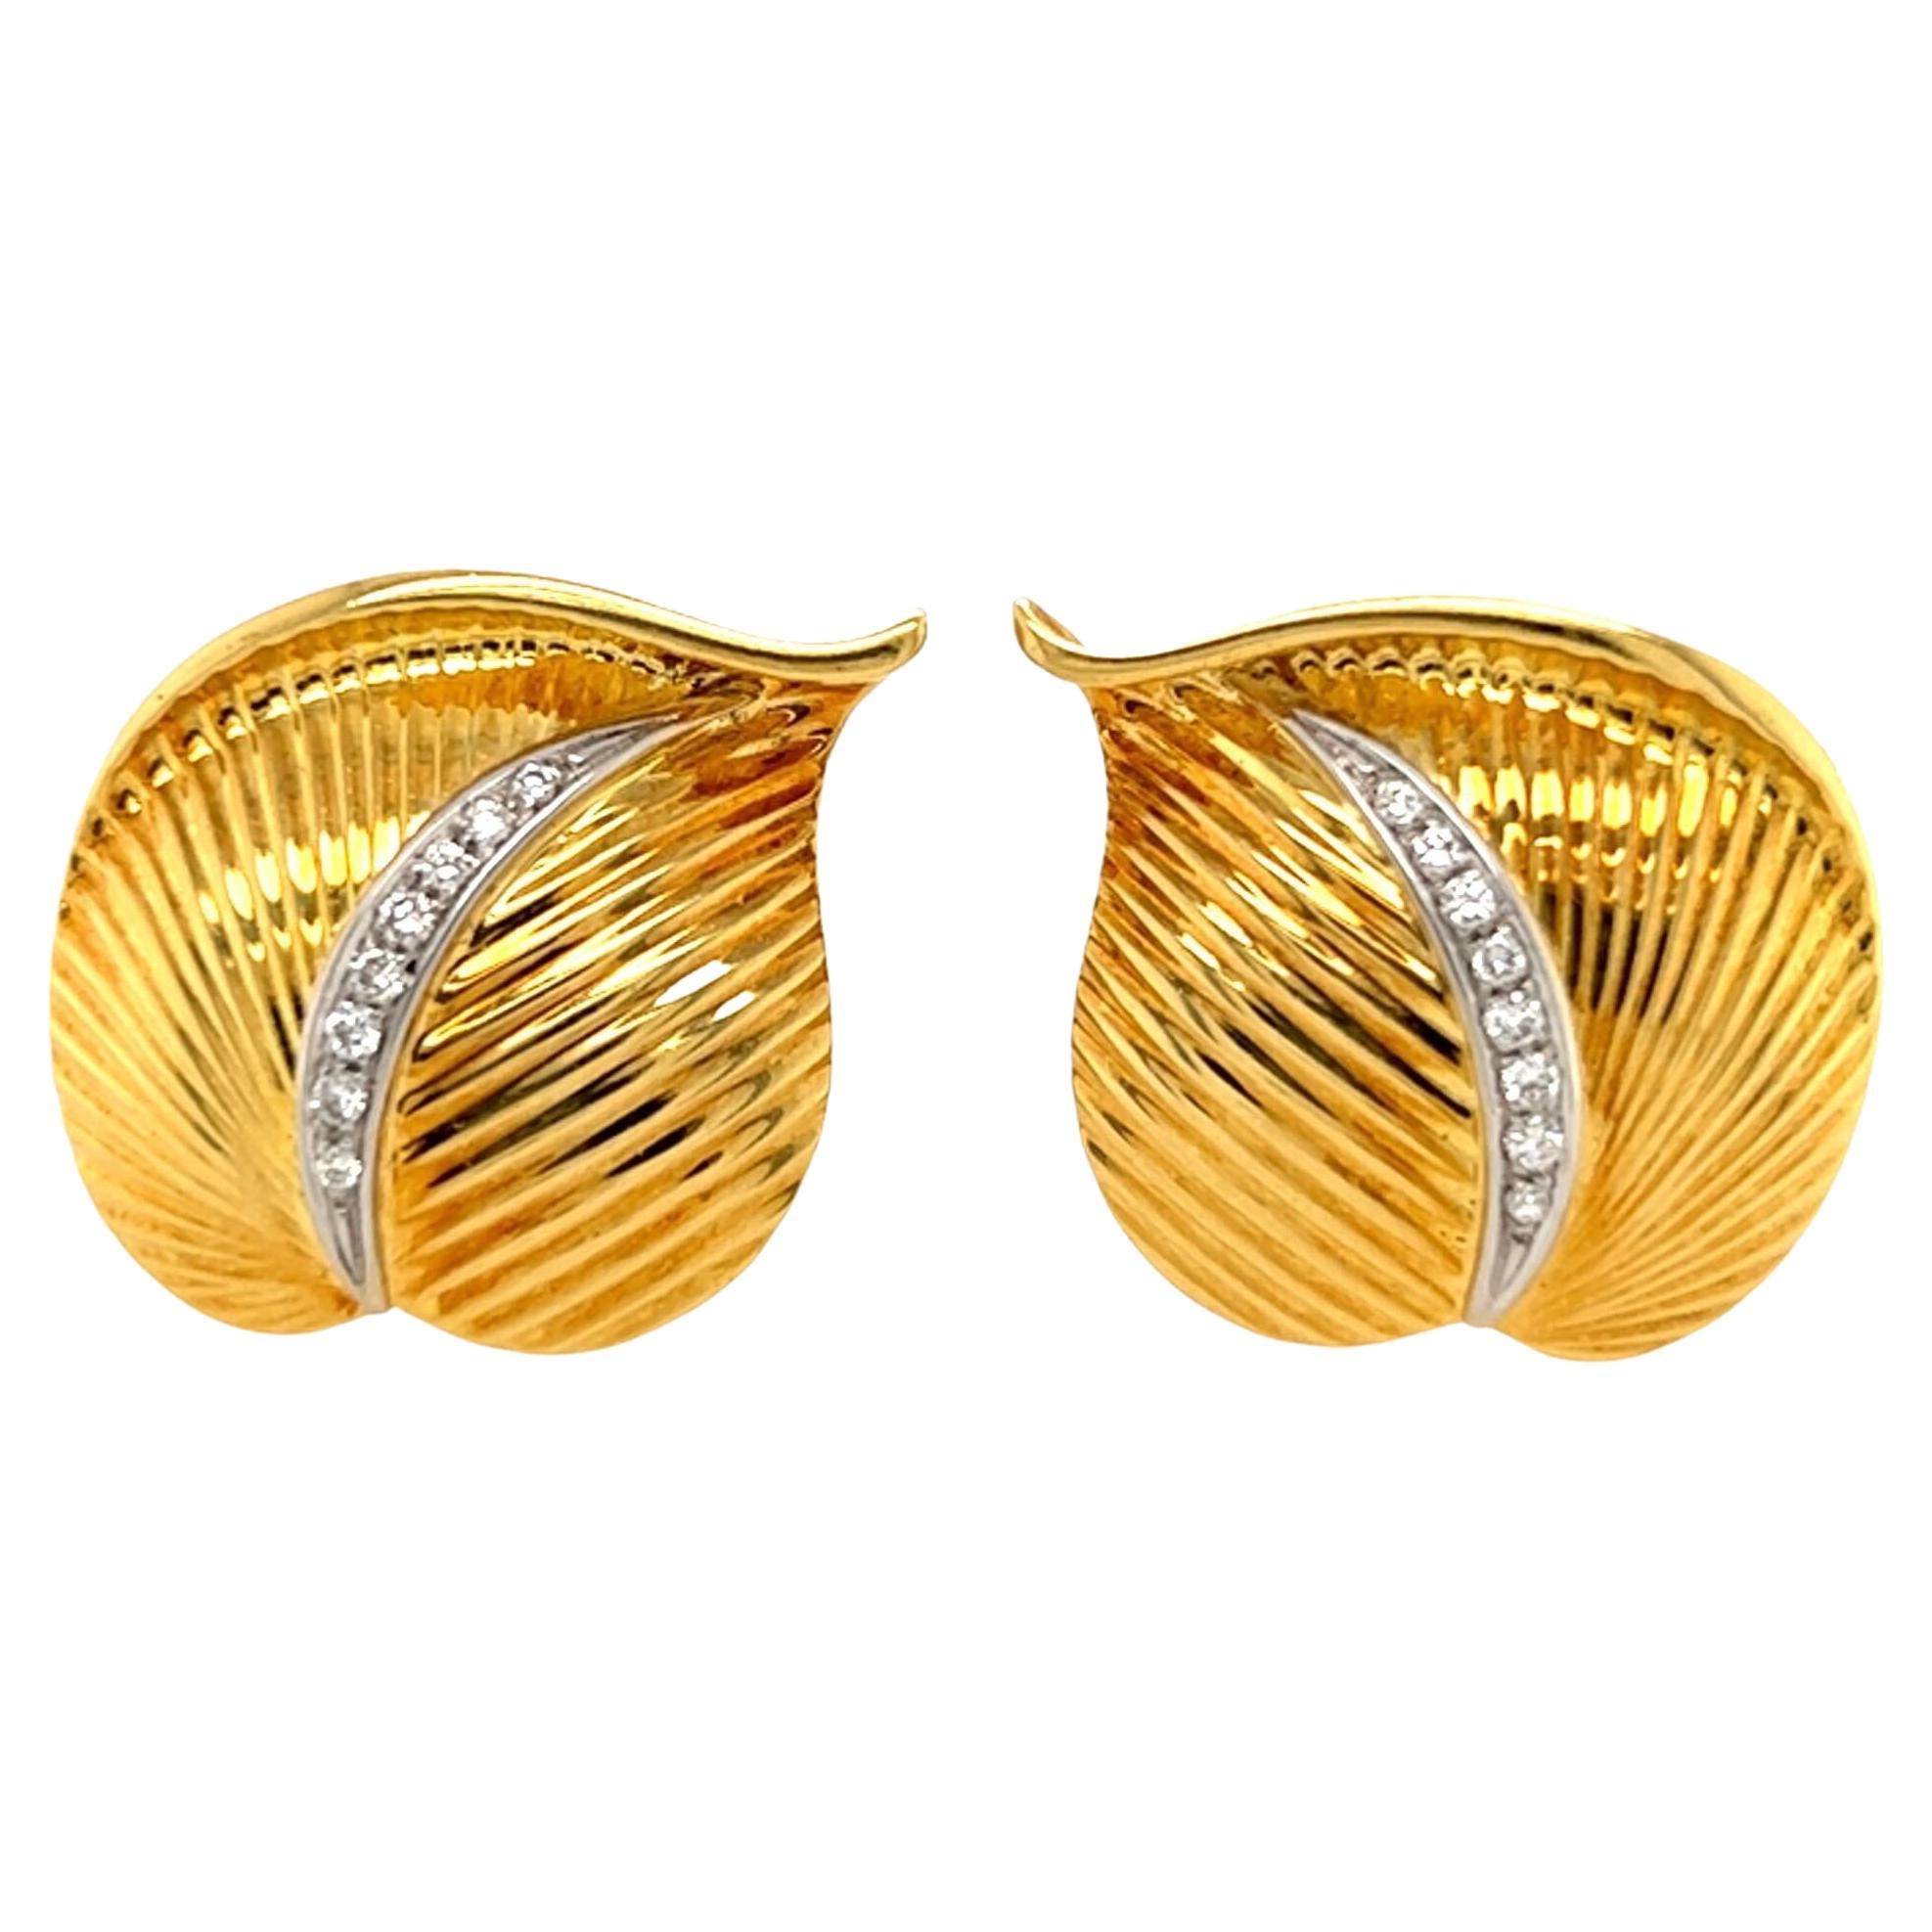 Pair of 18 Karat Yellow Gold and Diamond Leaf Earrings